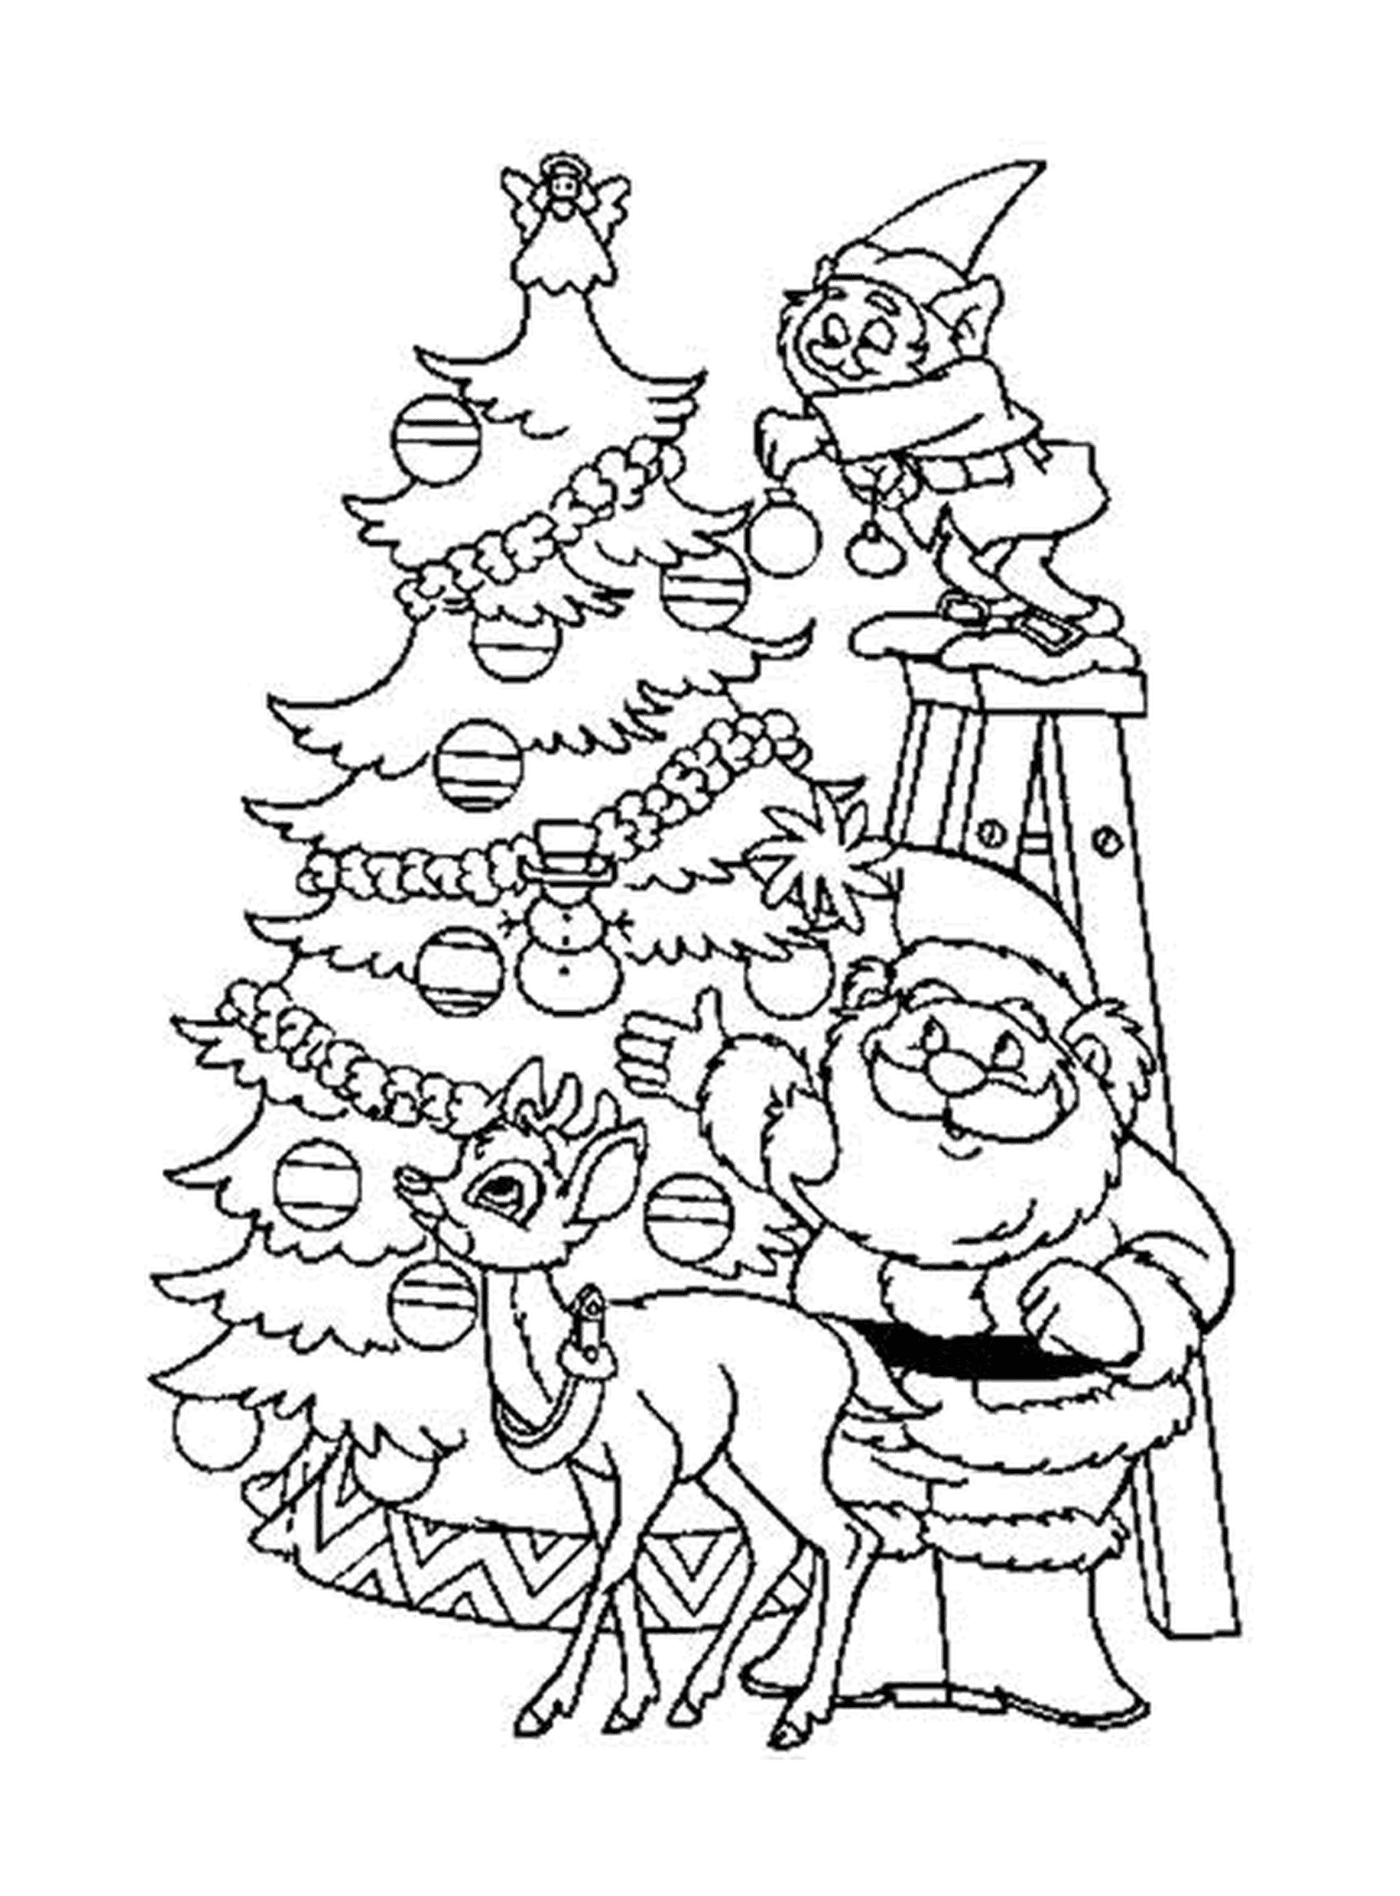  Santa Claus, reindeer and elk decorating a pretty tree 